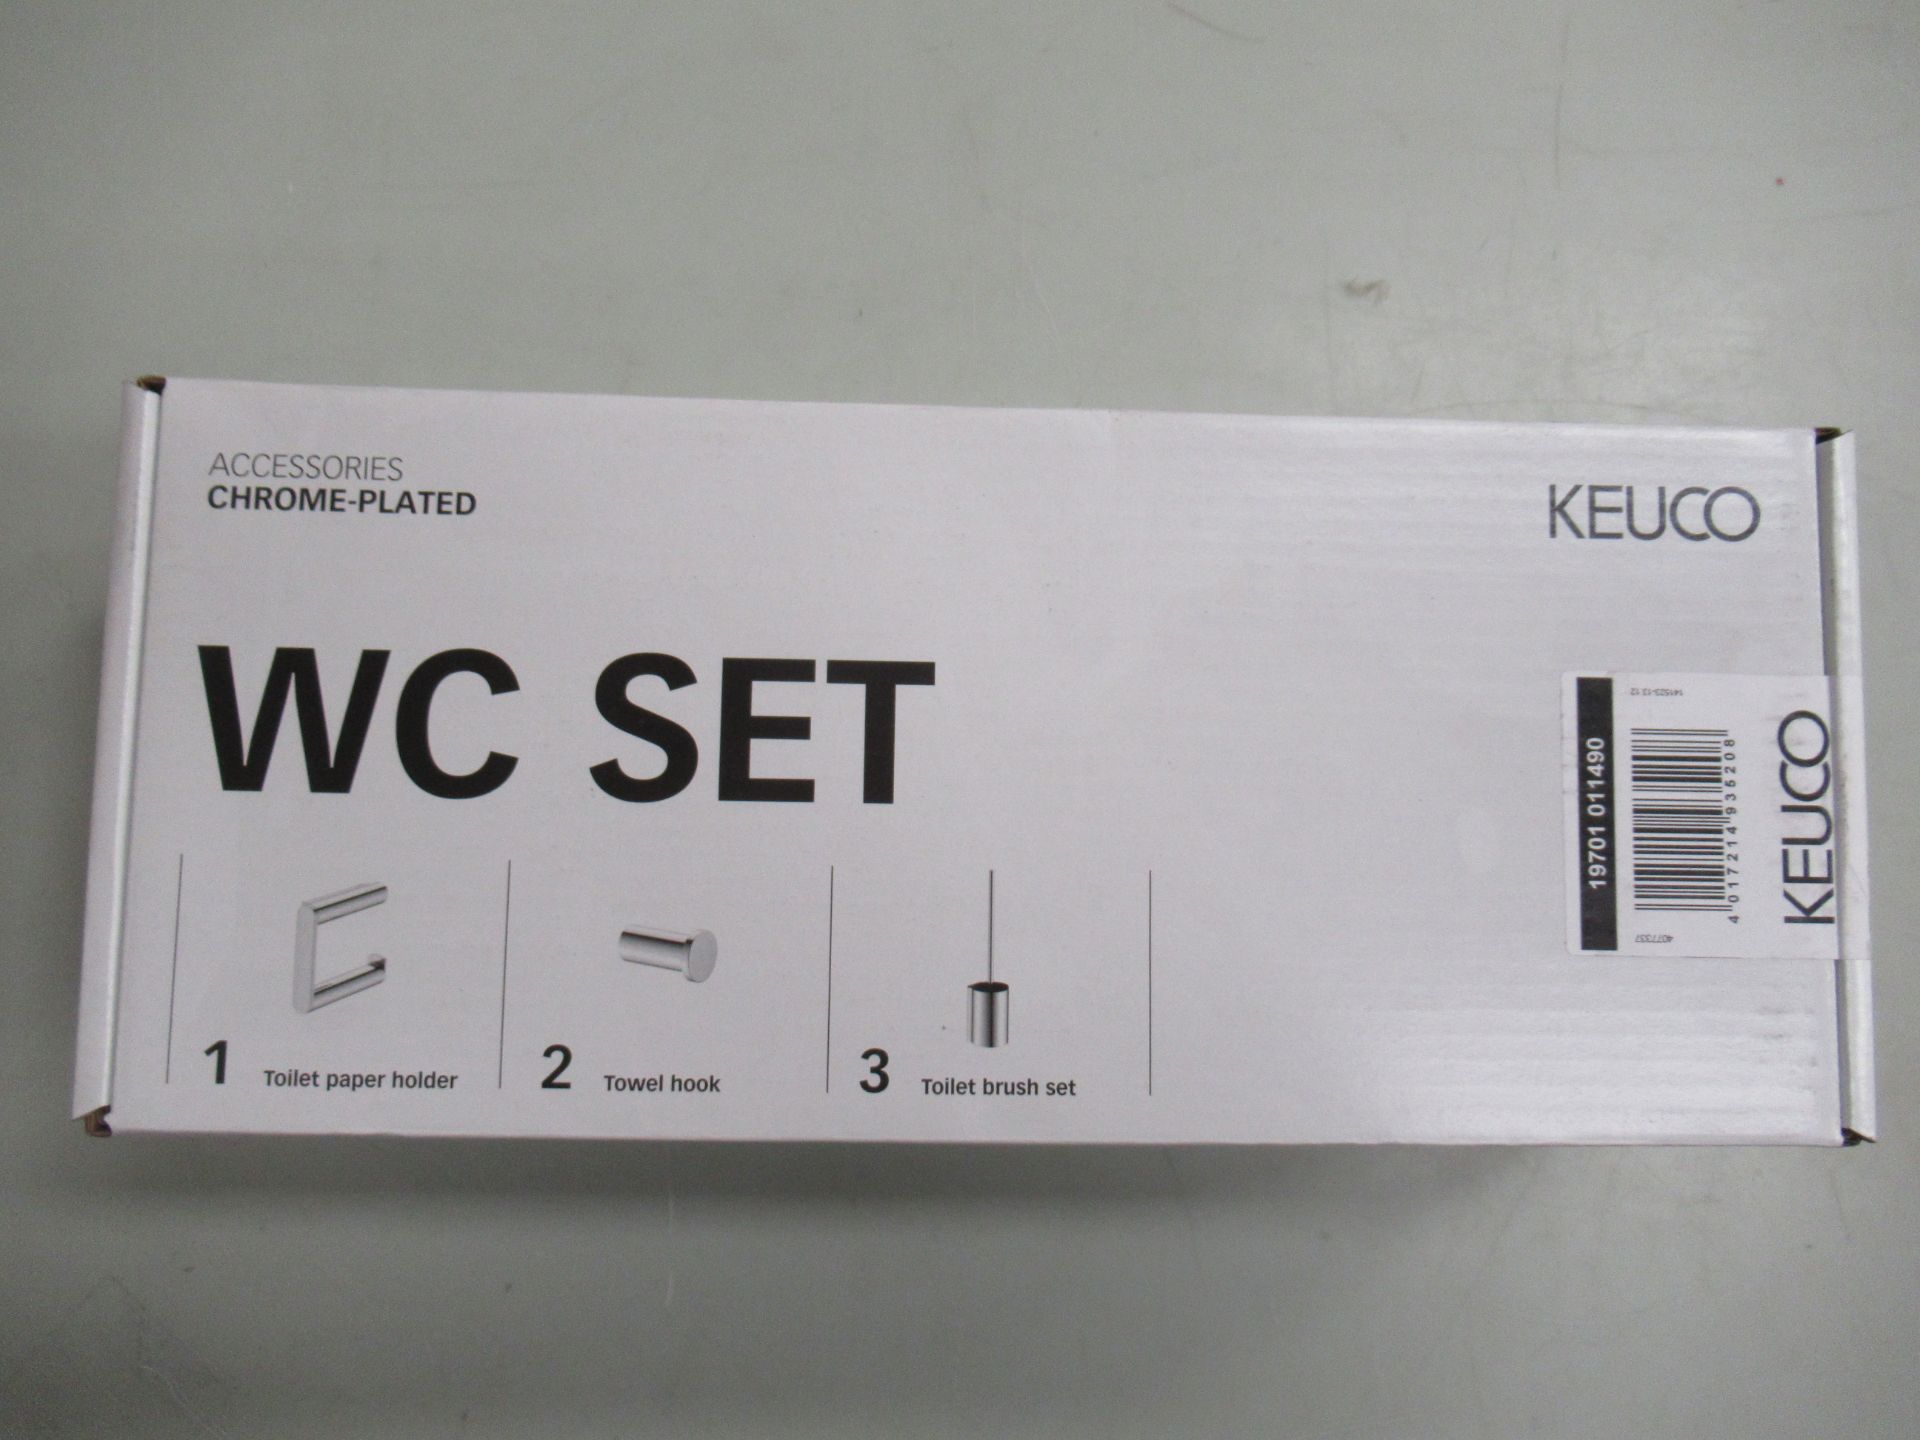 A Keuco W.C Set Chrome Plated, P/N 19701-011490